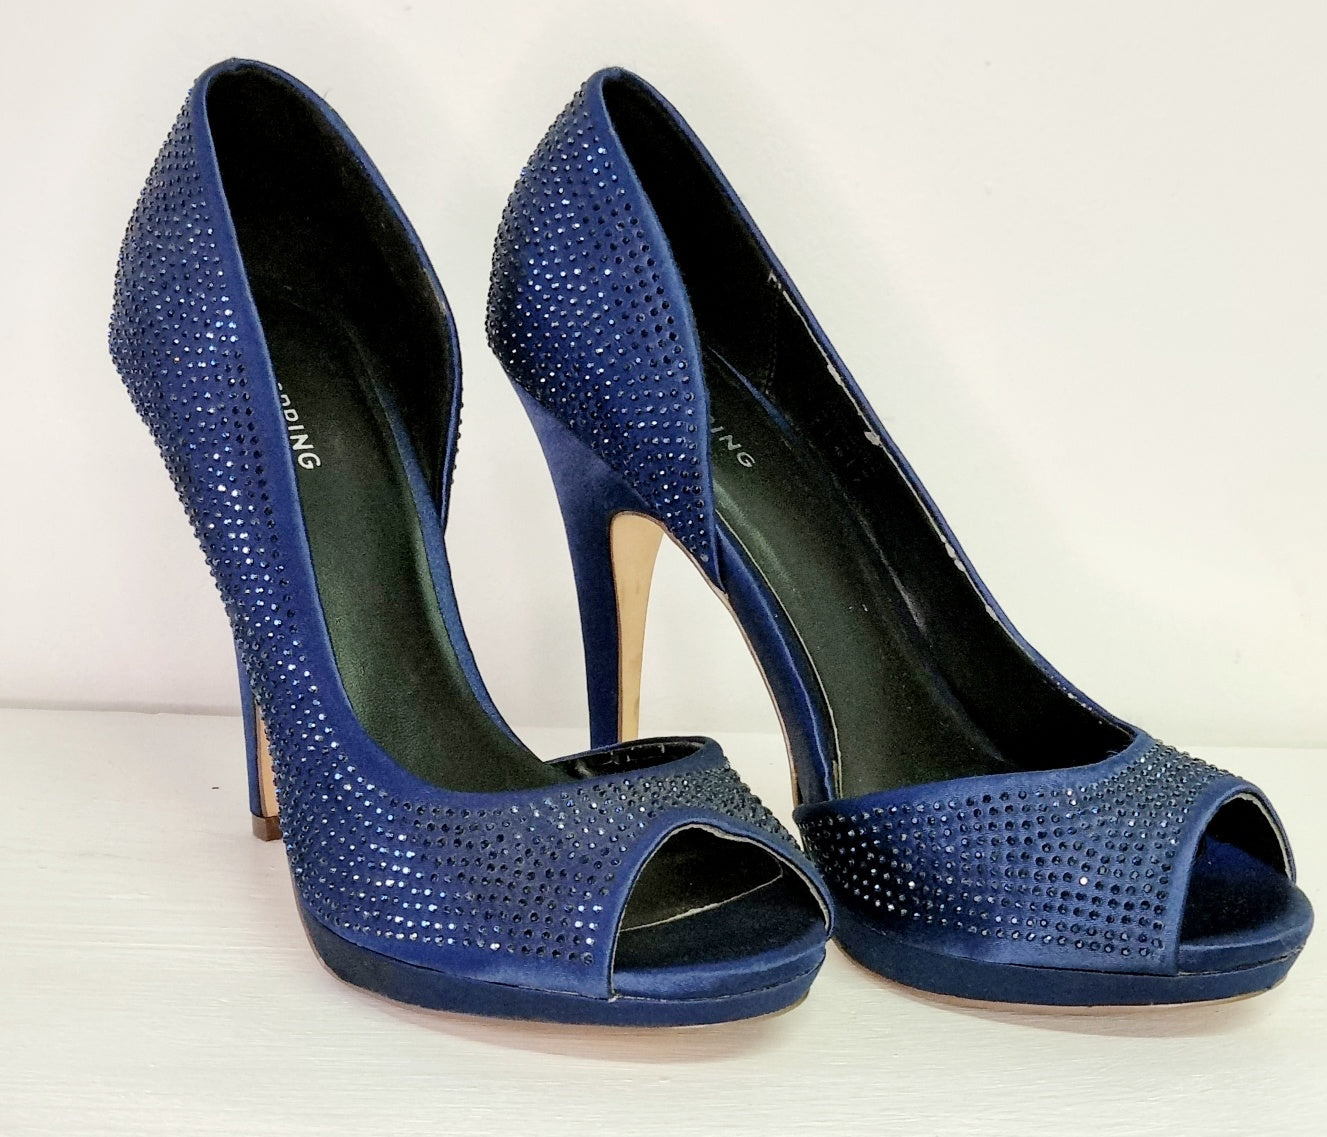 Call it Spring - Dark blue beaded open toe court stiletto heels